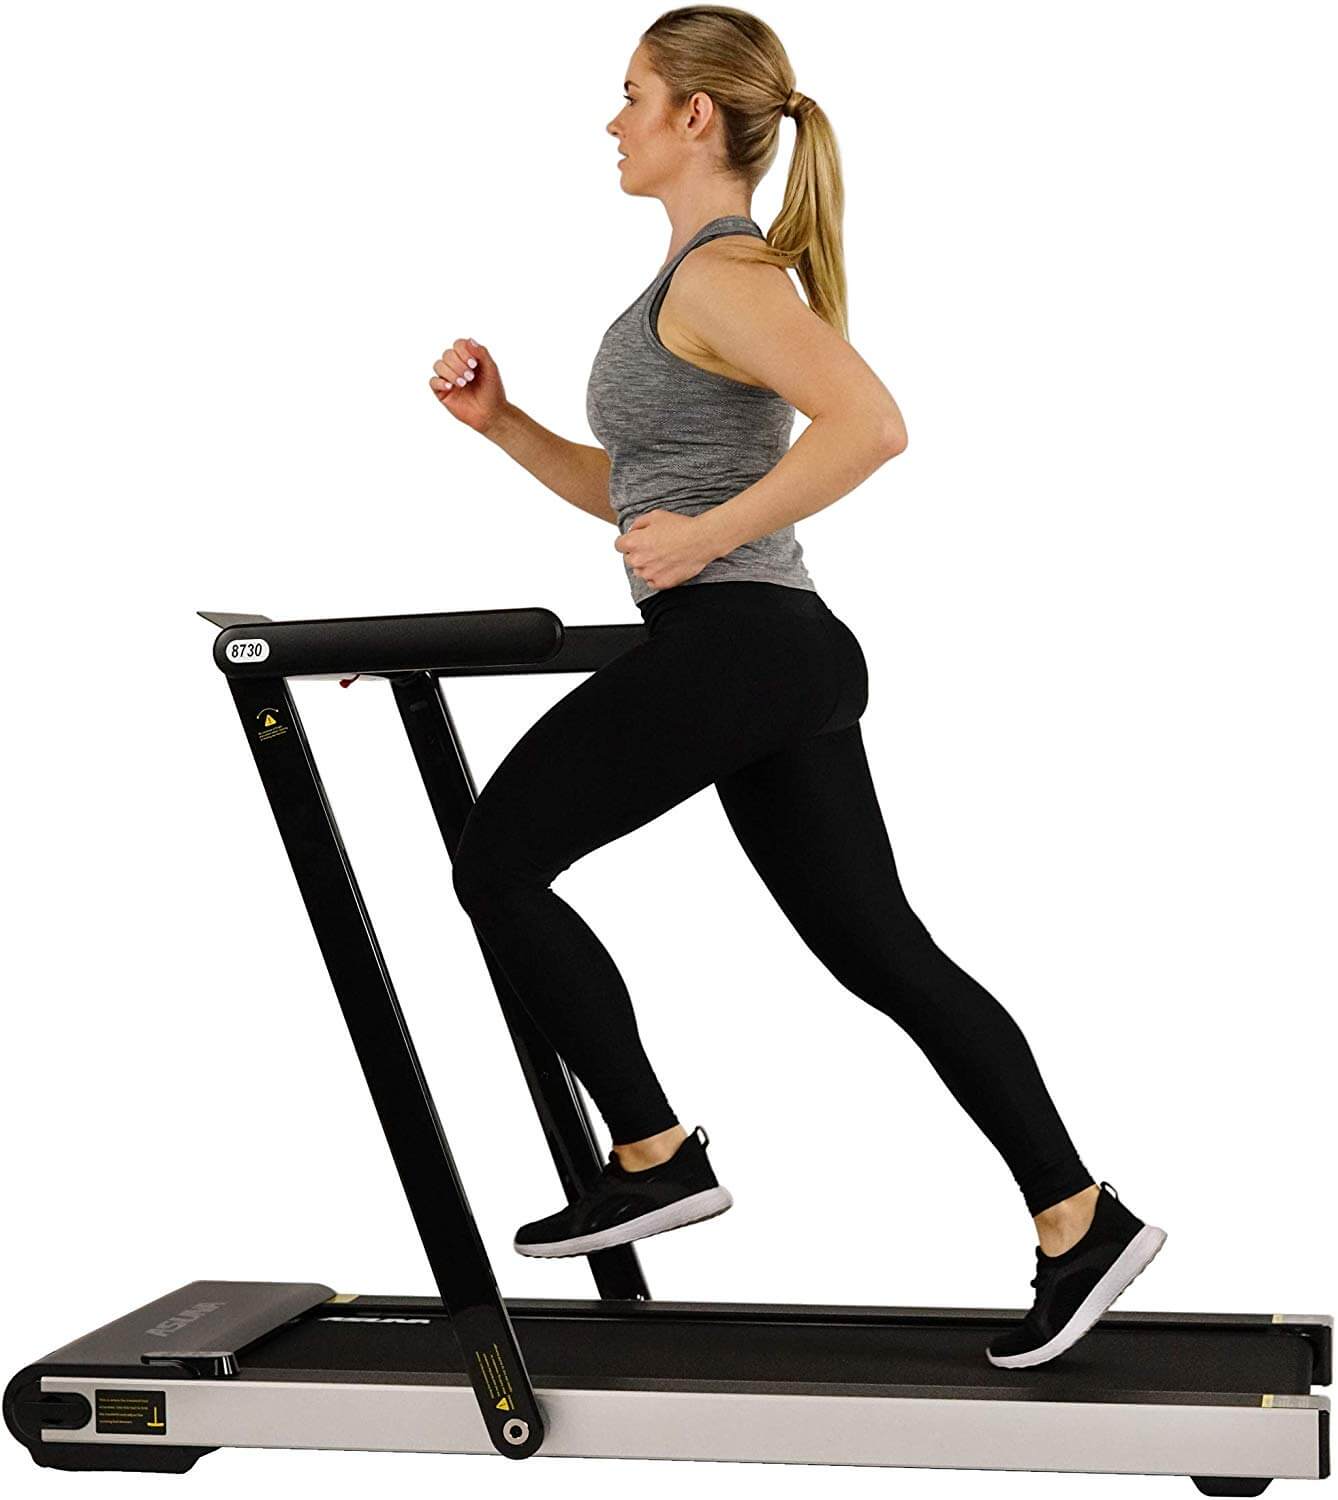 ASUNA 8730 G Compact Treadmill Review